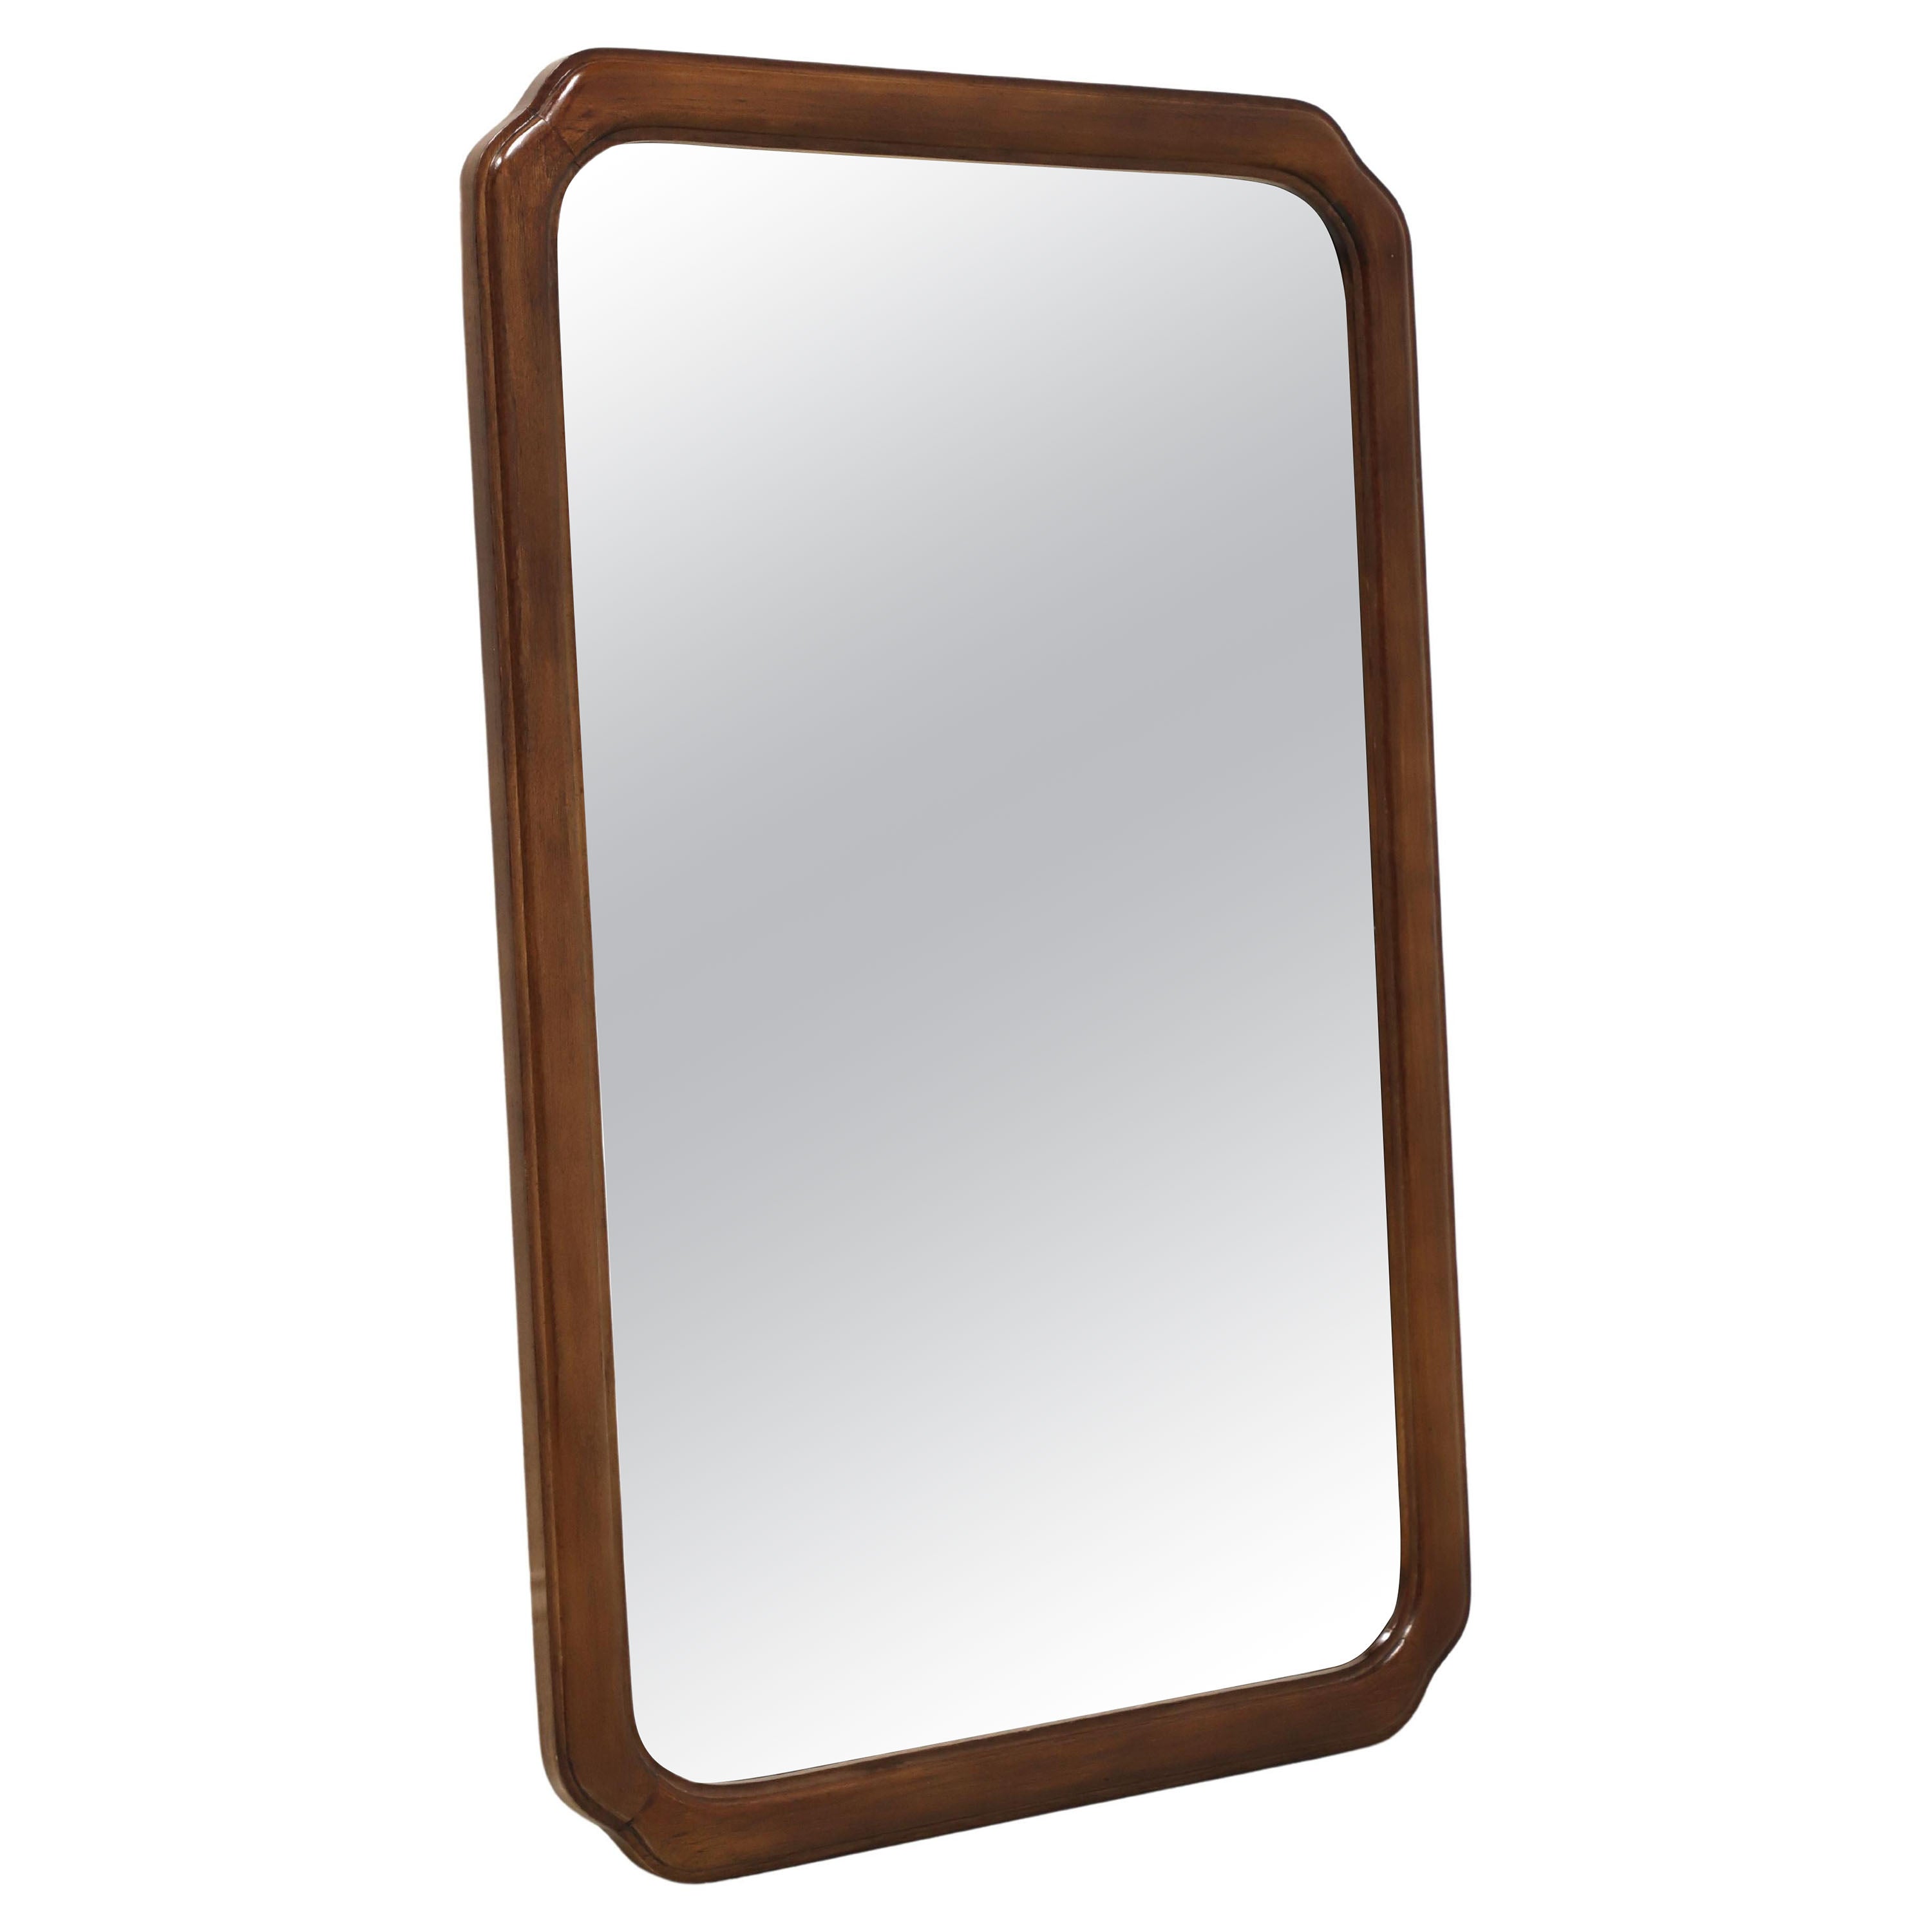 THOMASVILLE Mystique Walnut Asian Influenced Dresser / Wall Mirror For Sale